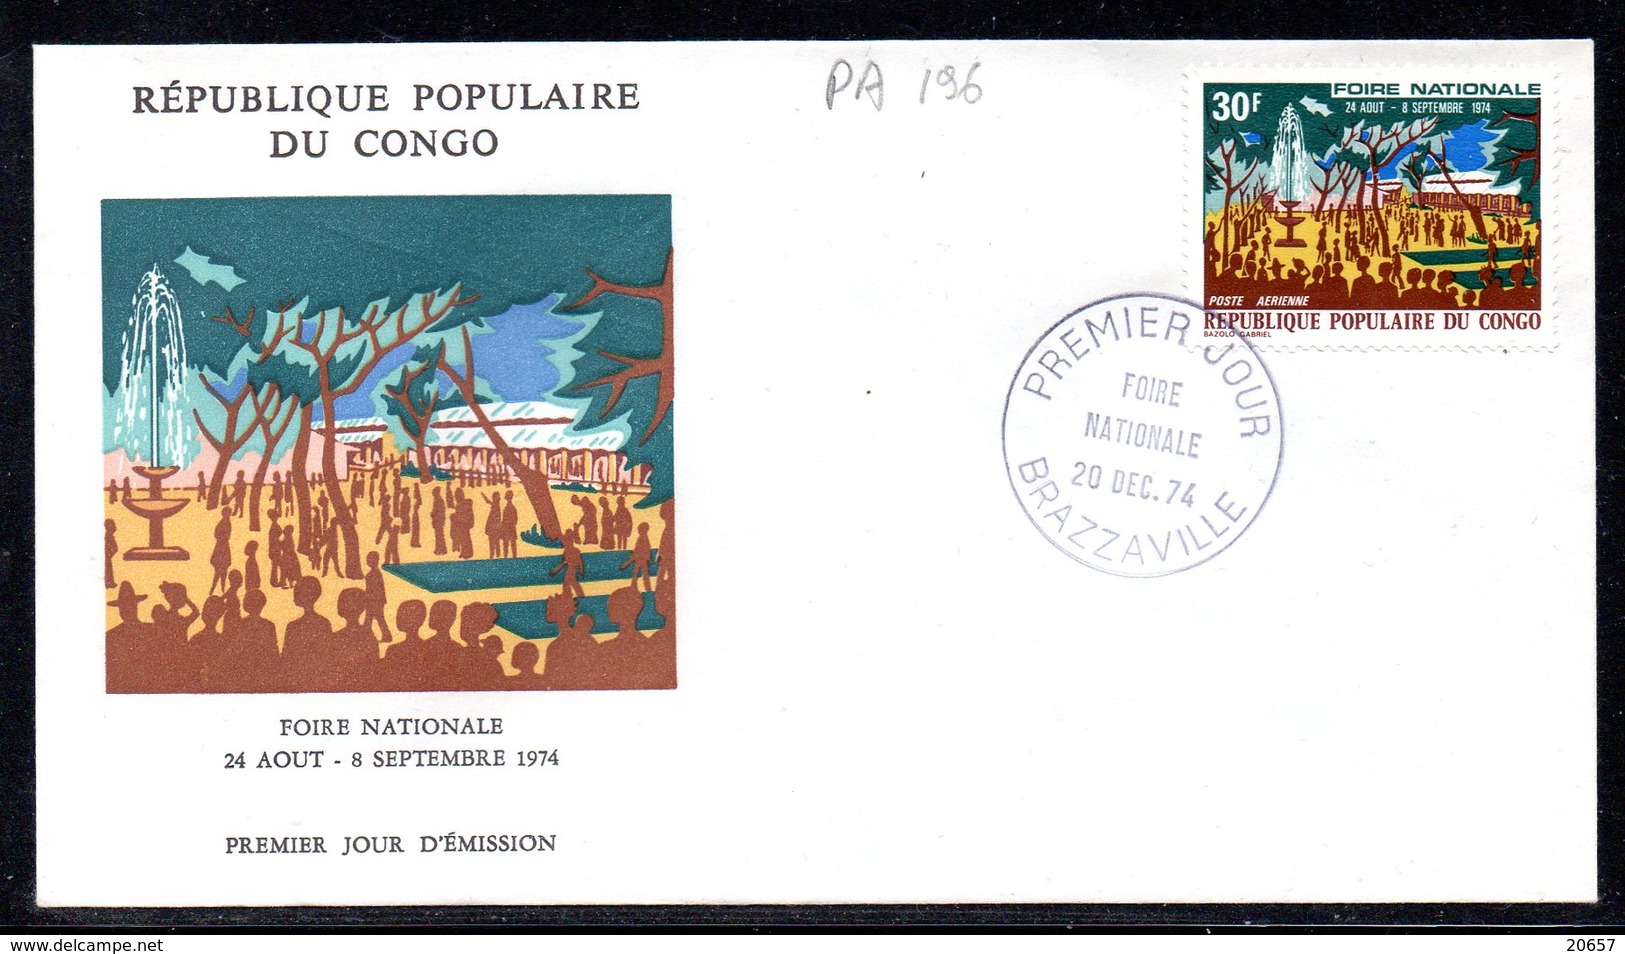 Congo A 196 Fdc Foire Nationale - FDC